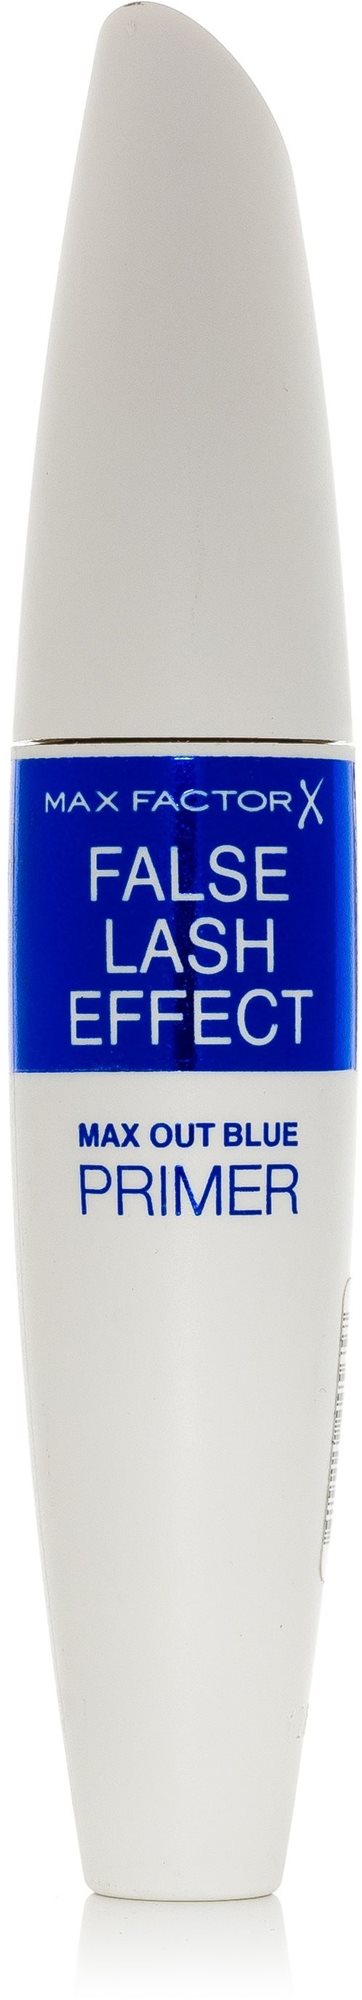 MAX FACTOR Primer False Lash Effect Max Out 7 ml